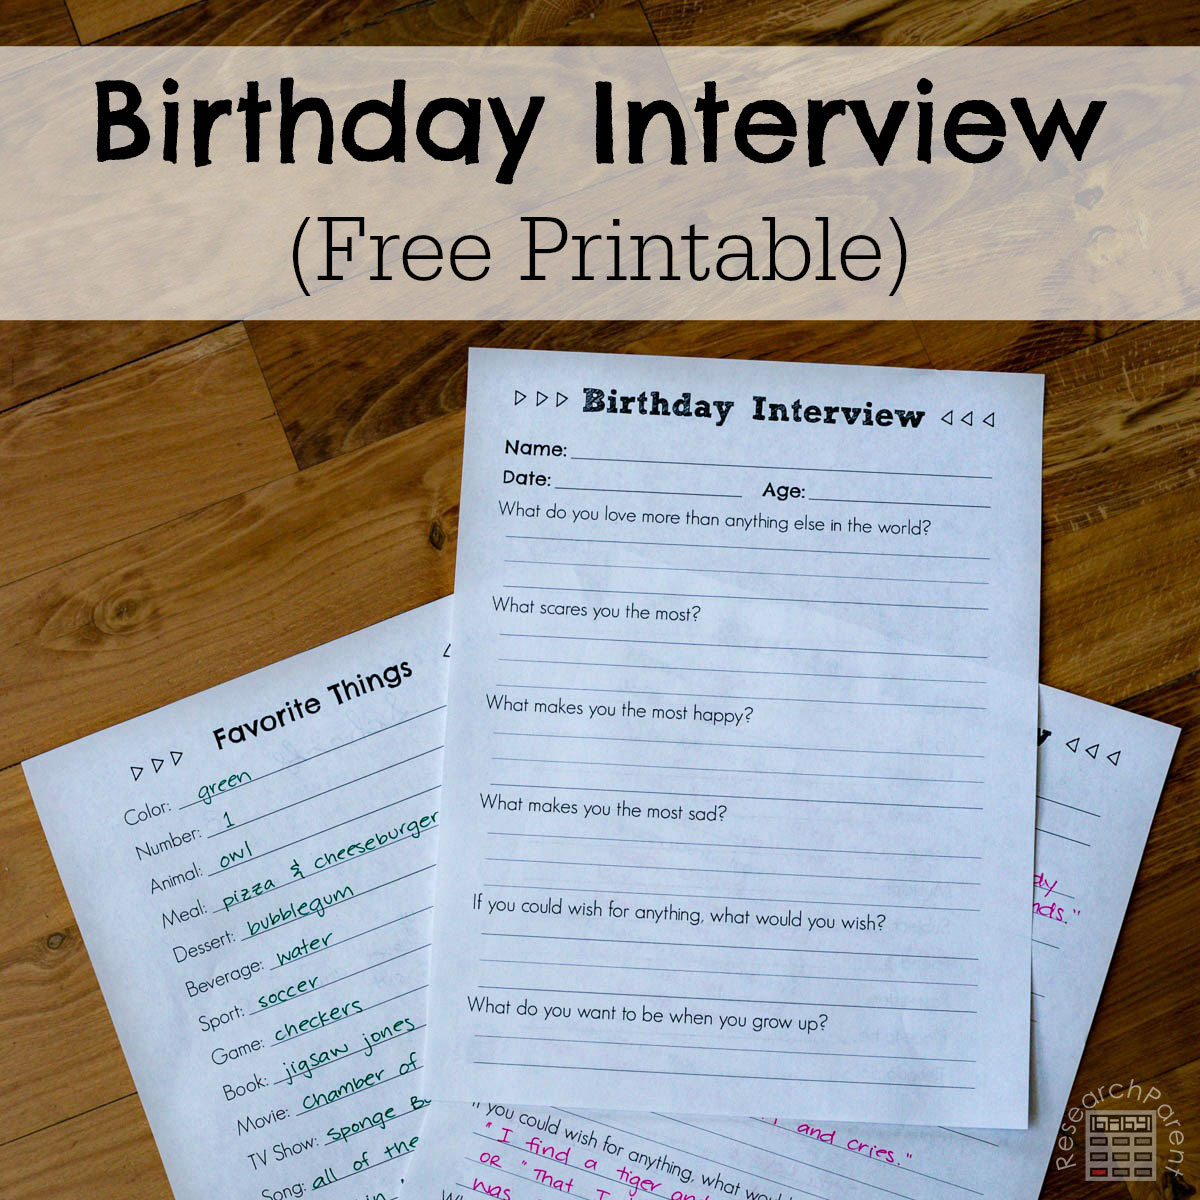 Birthday Inteview Form (Free Printable)